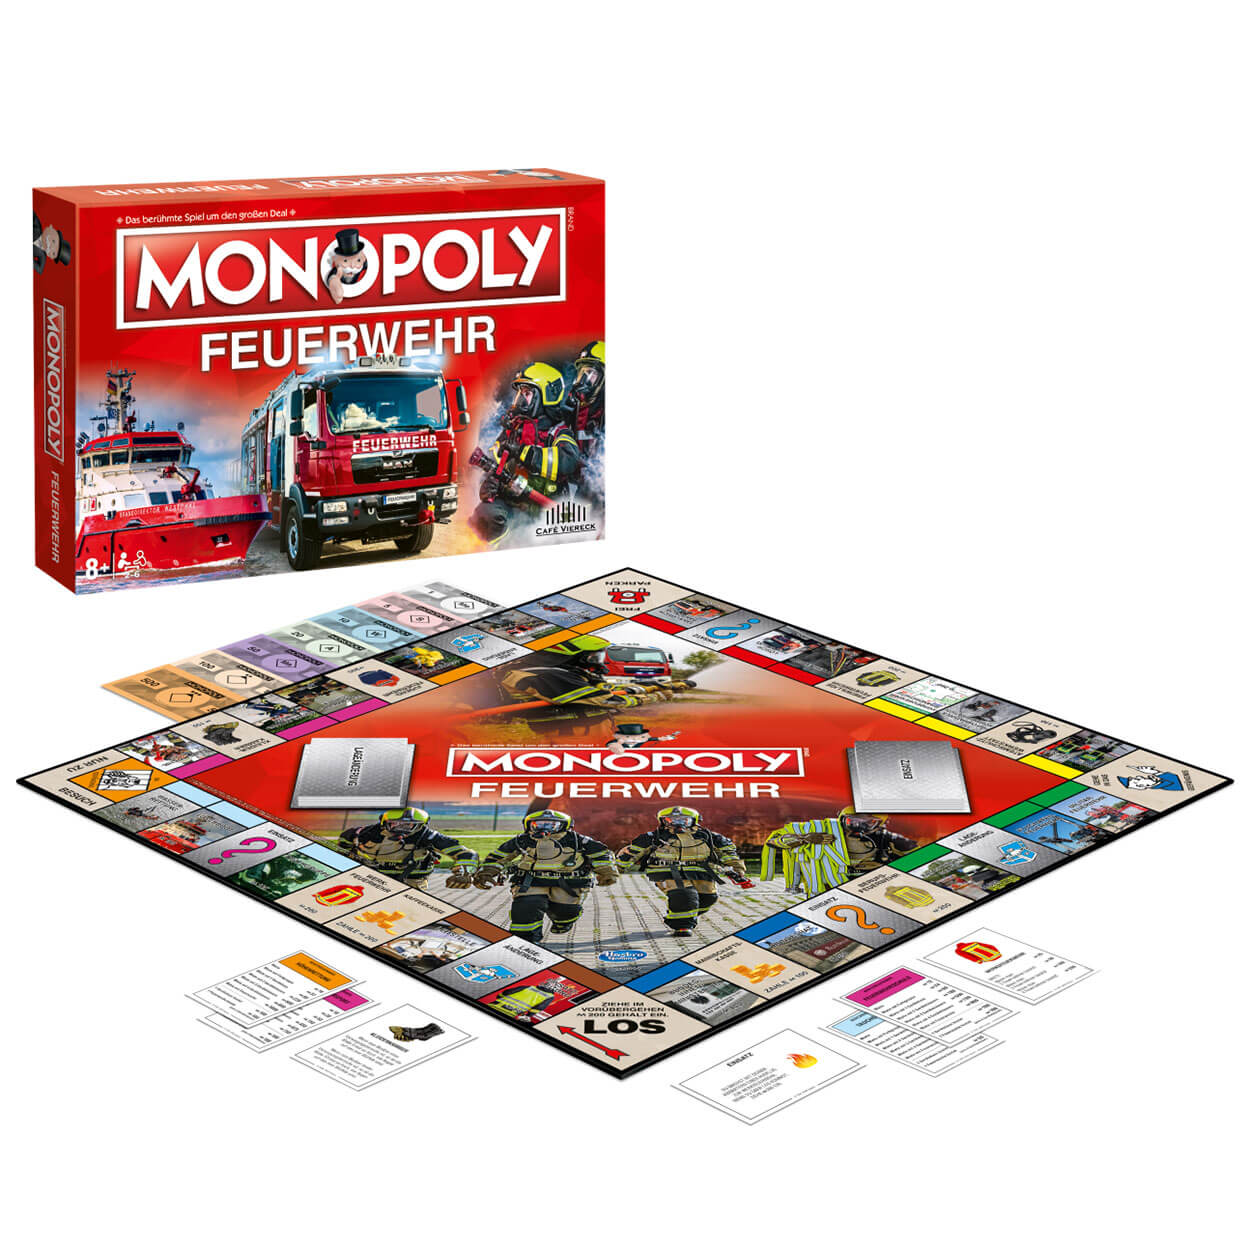 Monopoly Feuerwehr Edition